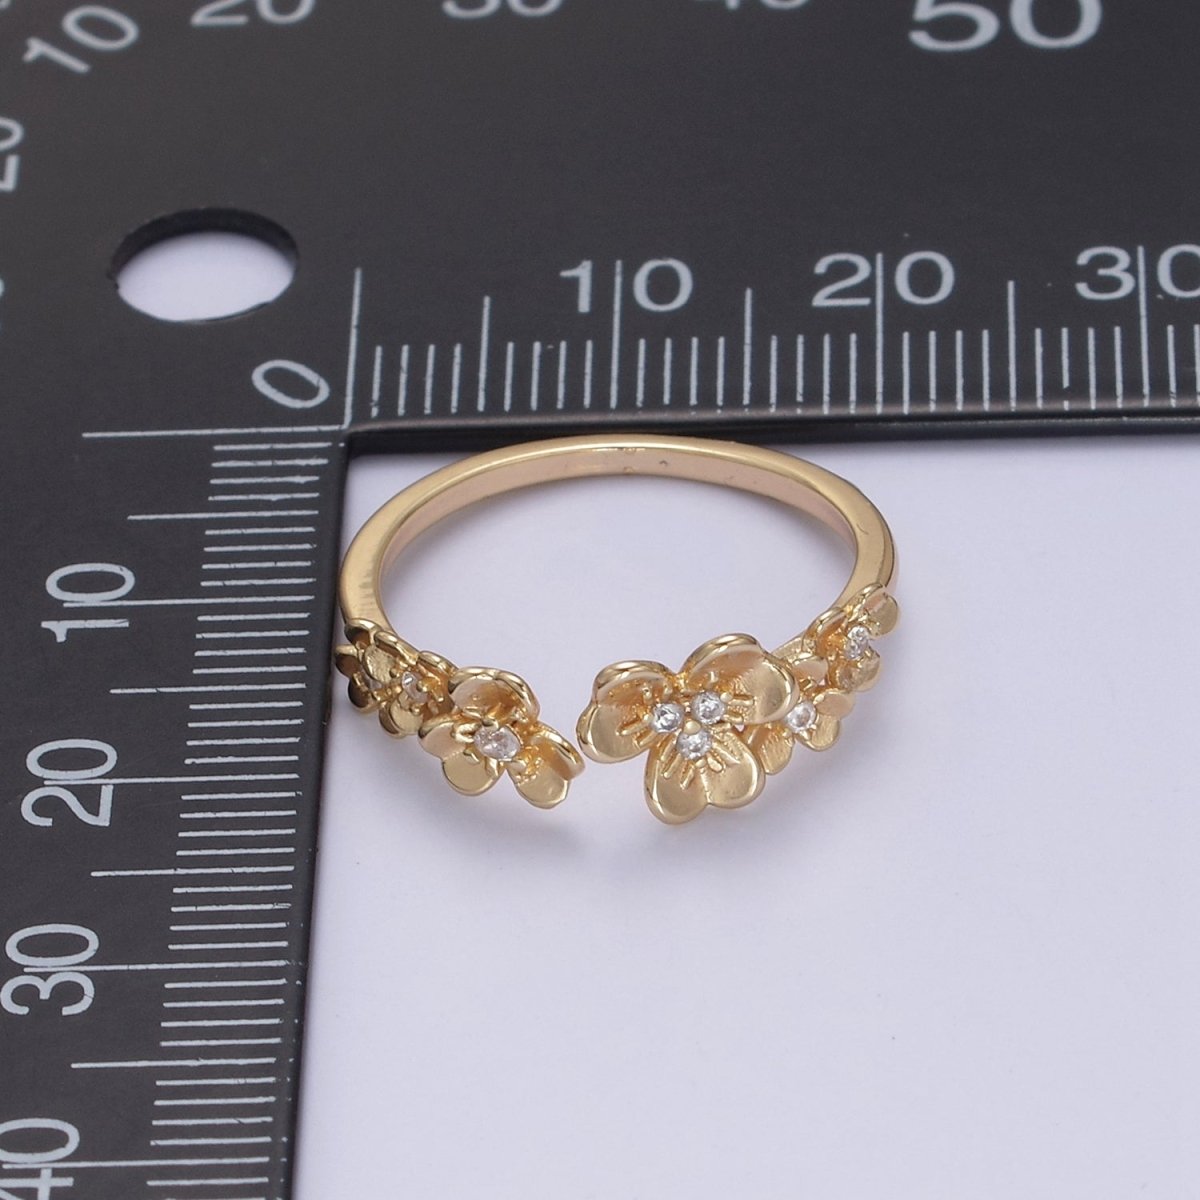 Dainty Daisy Ring in Gold Filled Silver Open Adjustable Flower Ring U-495 U-496 - DLUXCA